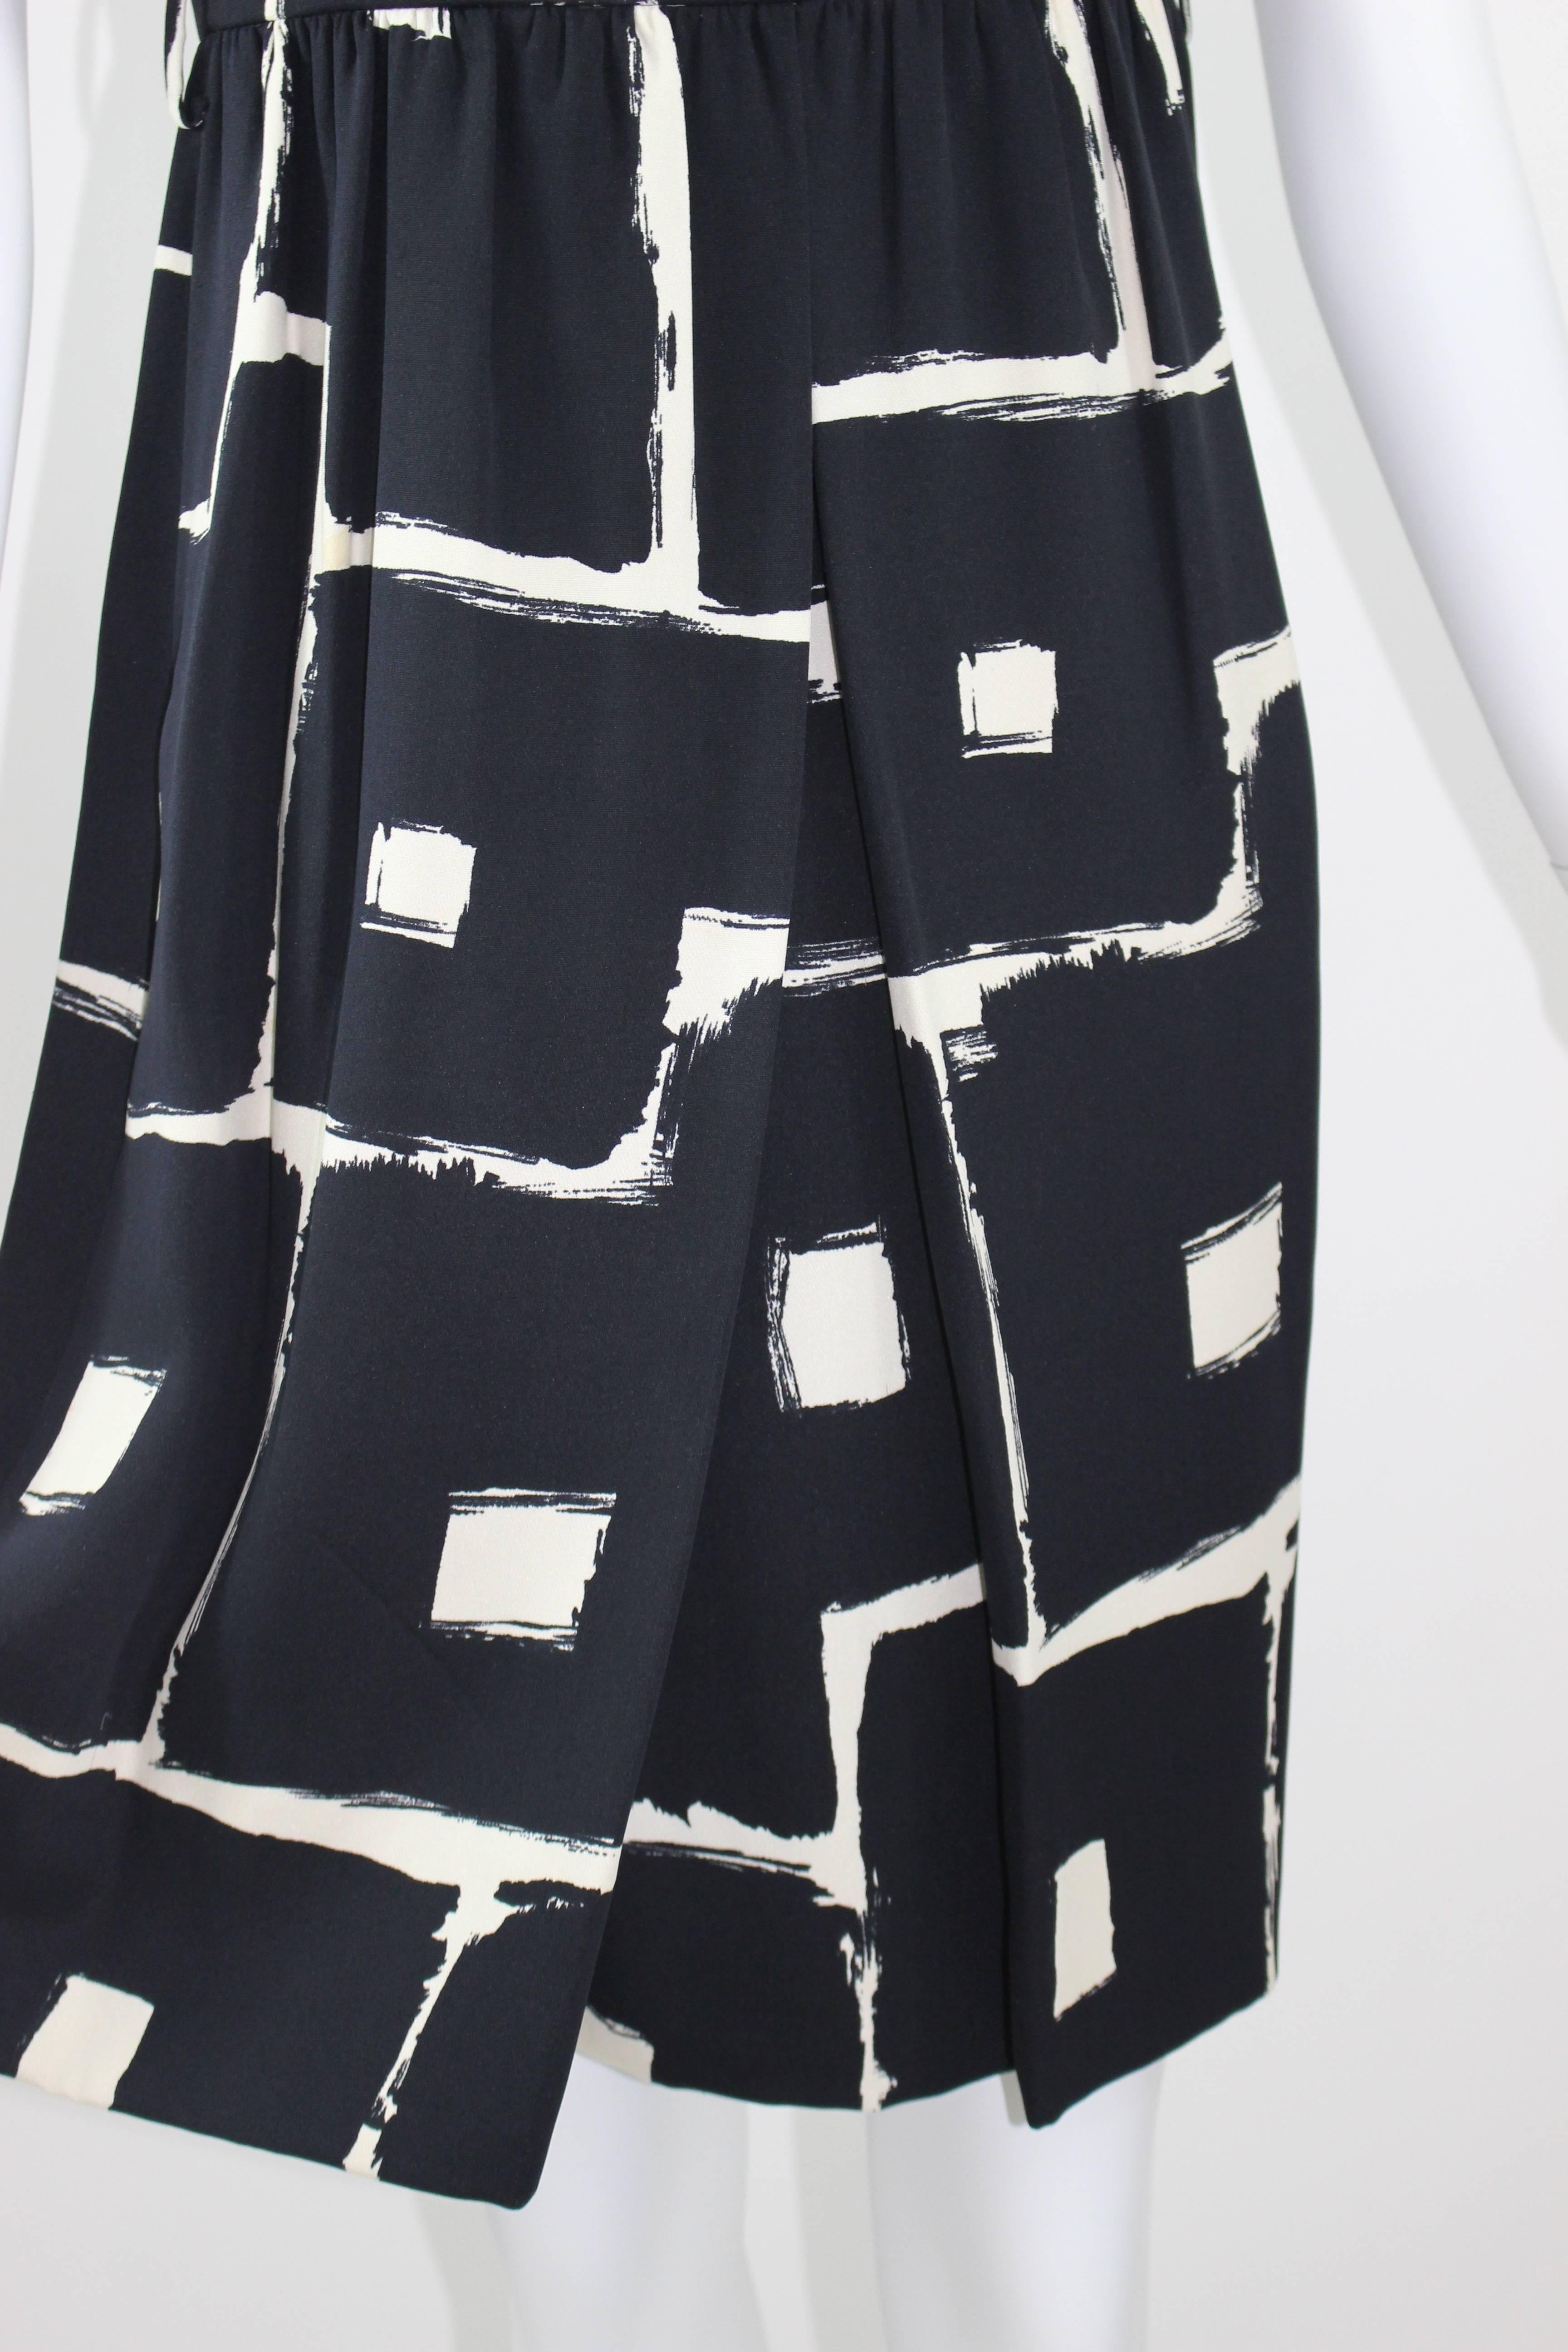 Galanos Mod Black and White Print Dress, 1960s  2